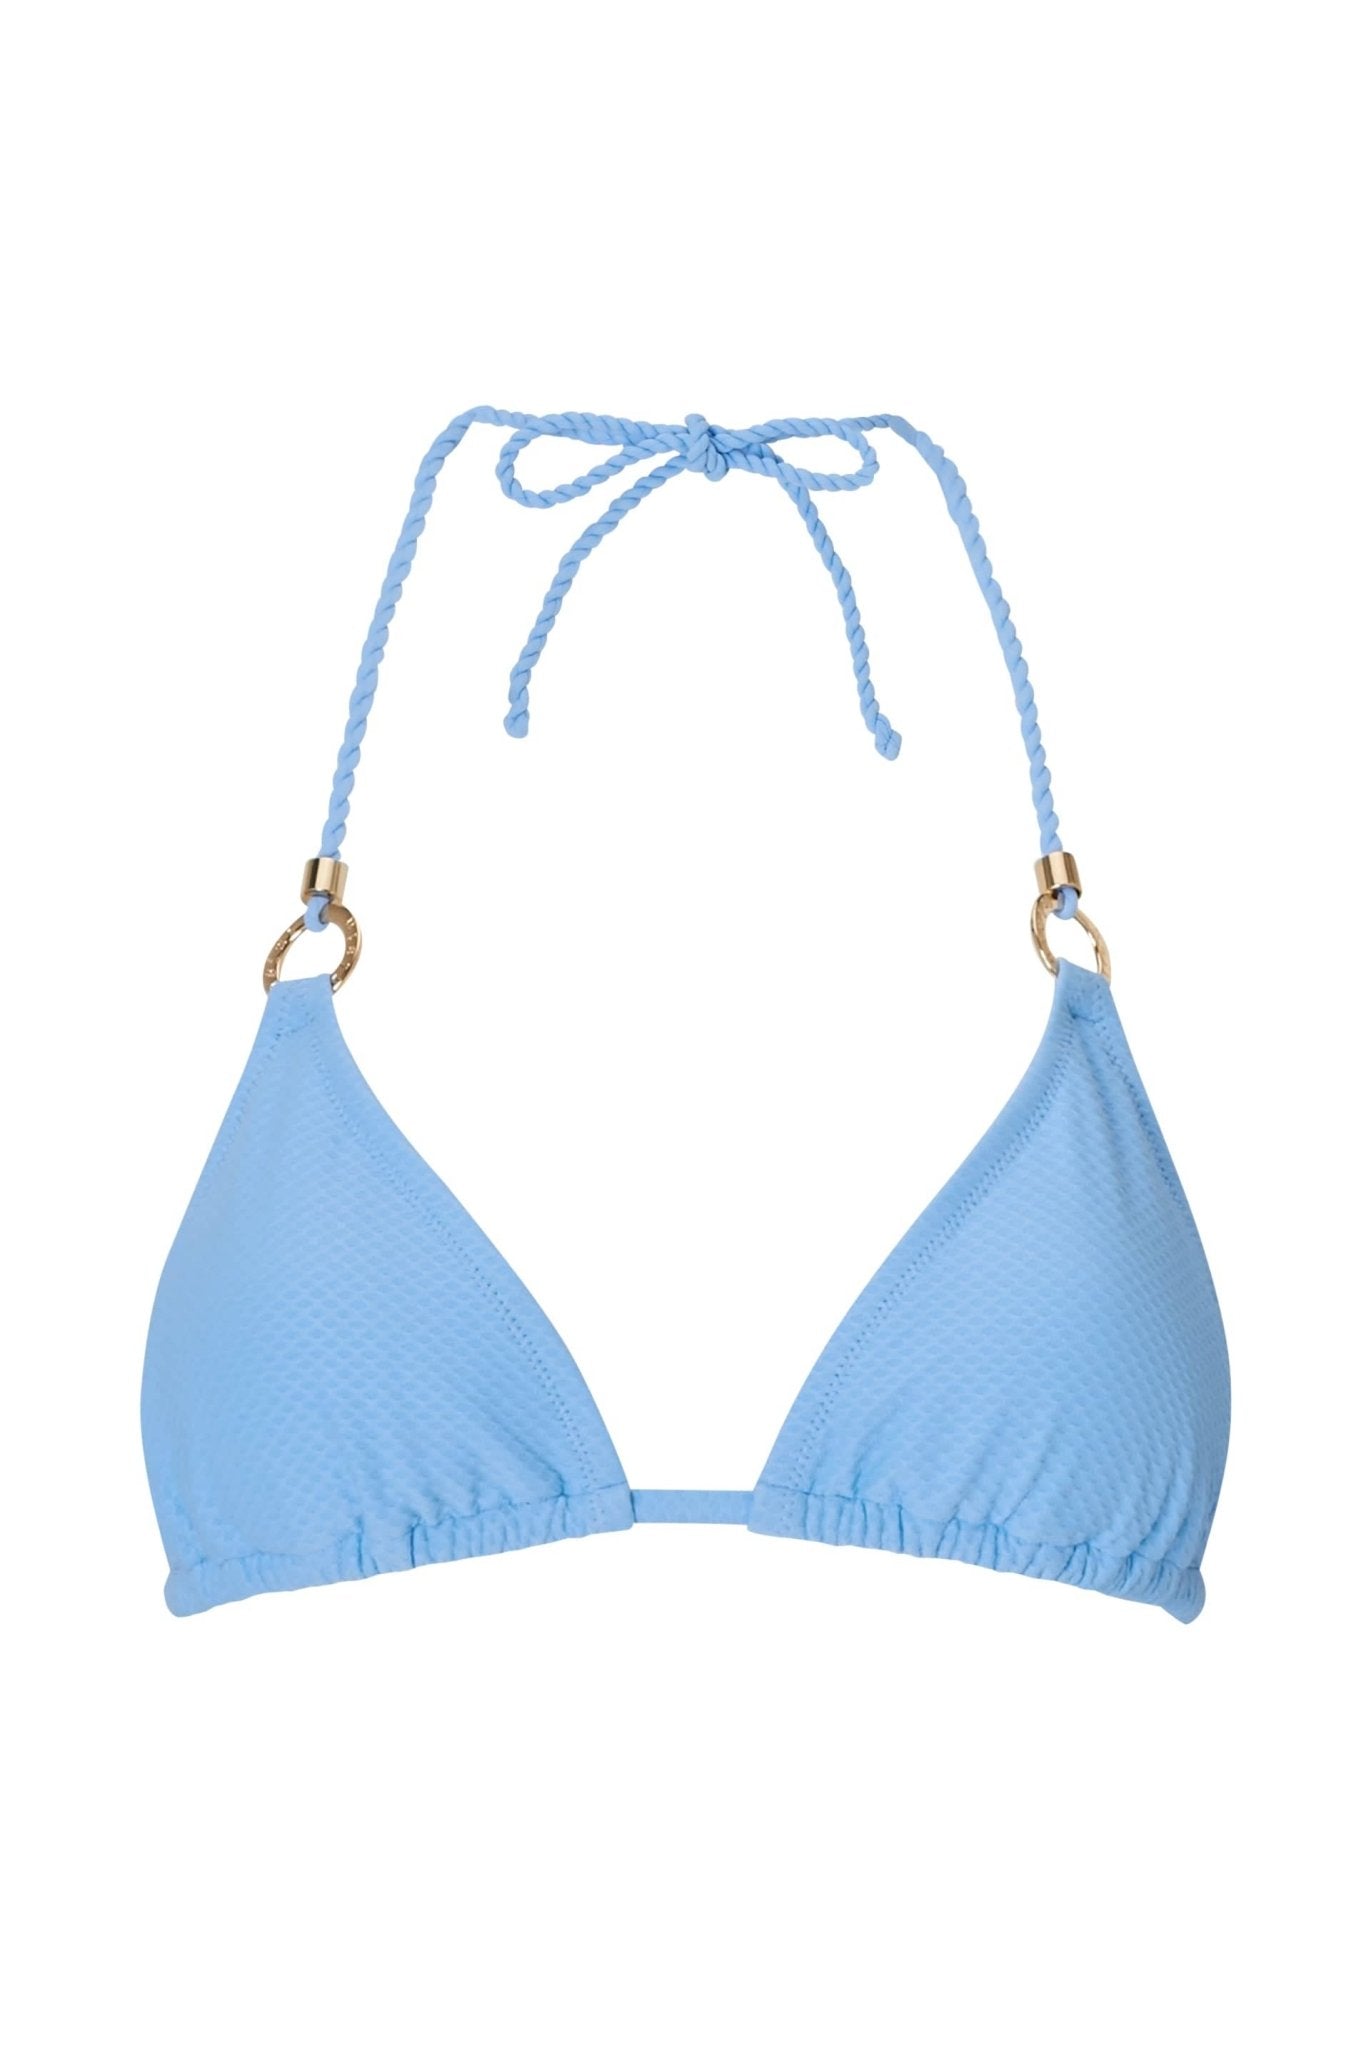 Core Ring Triangle Bikini Top in Ocean Tide - Heidi Klein - UK Store